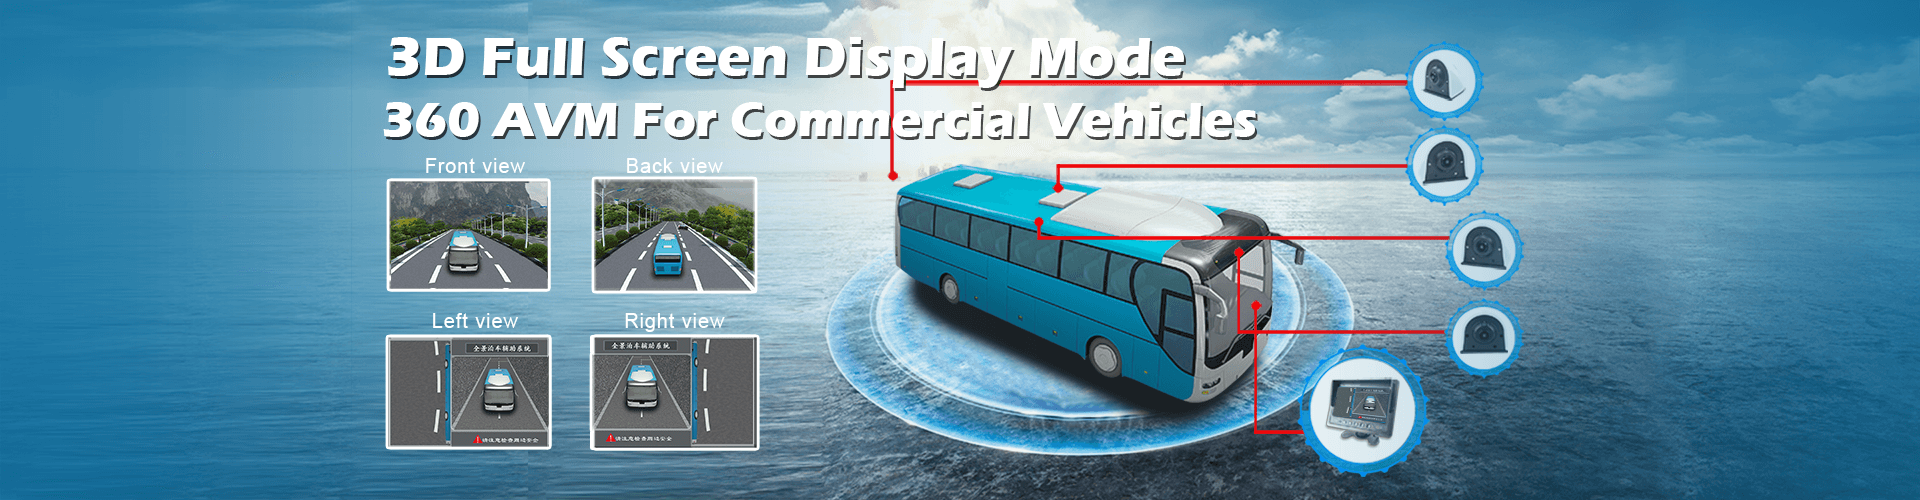 360 3D AVM system for commercial vehicles (van, RV, bus, coach, trucks)